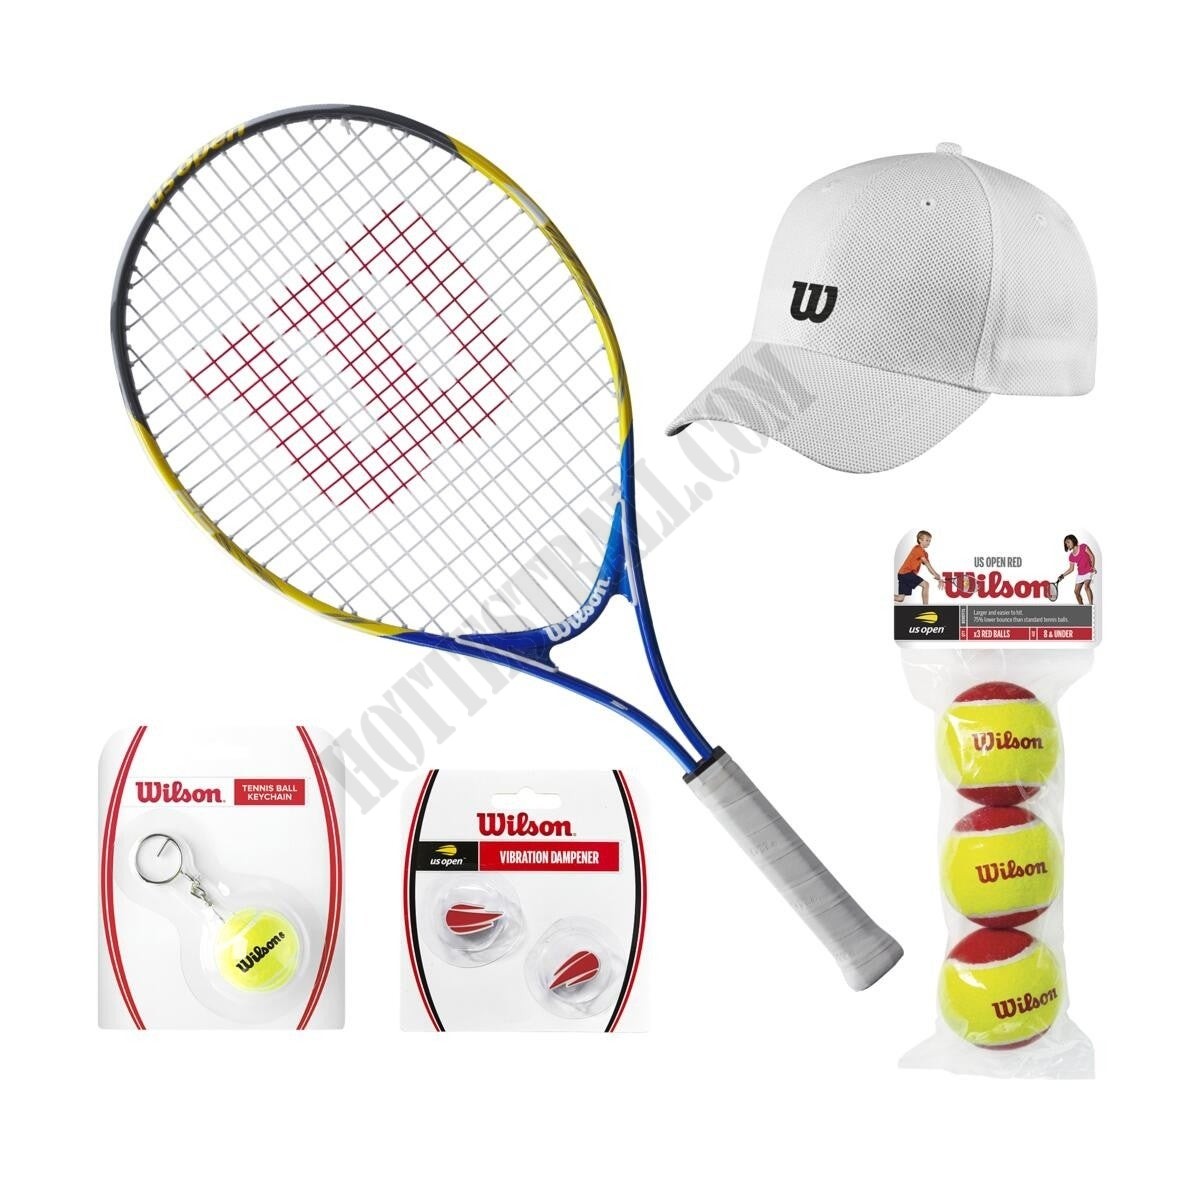 Junior Tennis Gift Set - Wilson Discount Store - Junior Tennis Gift Set - Wilson Discount Store